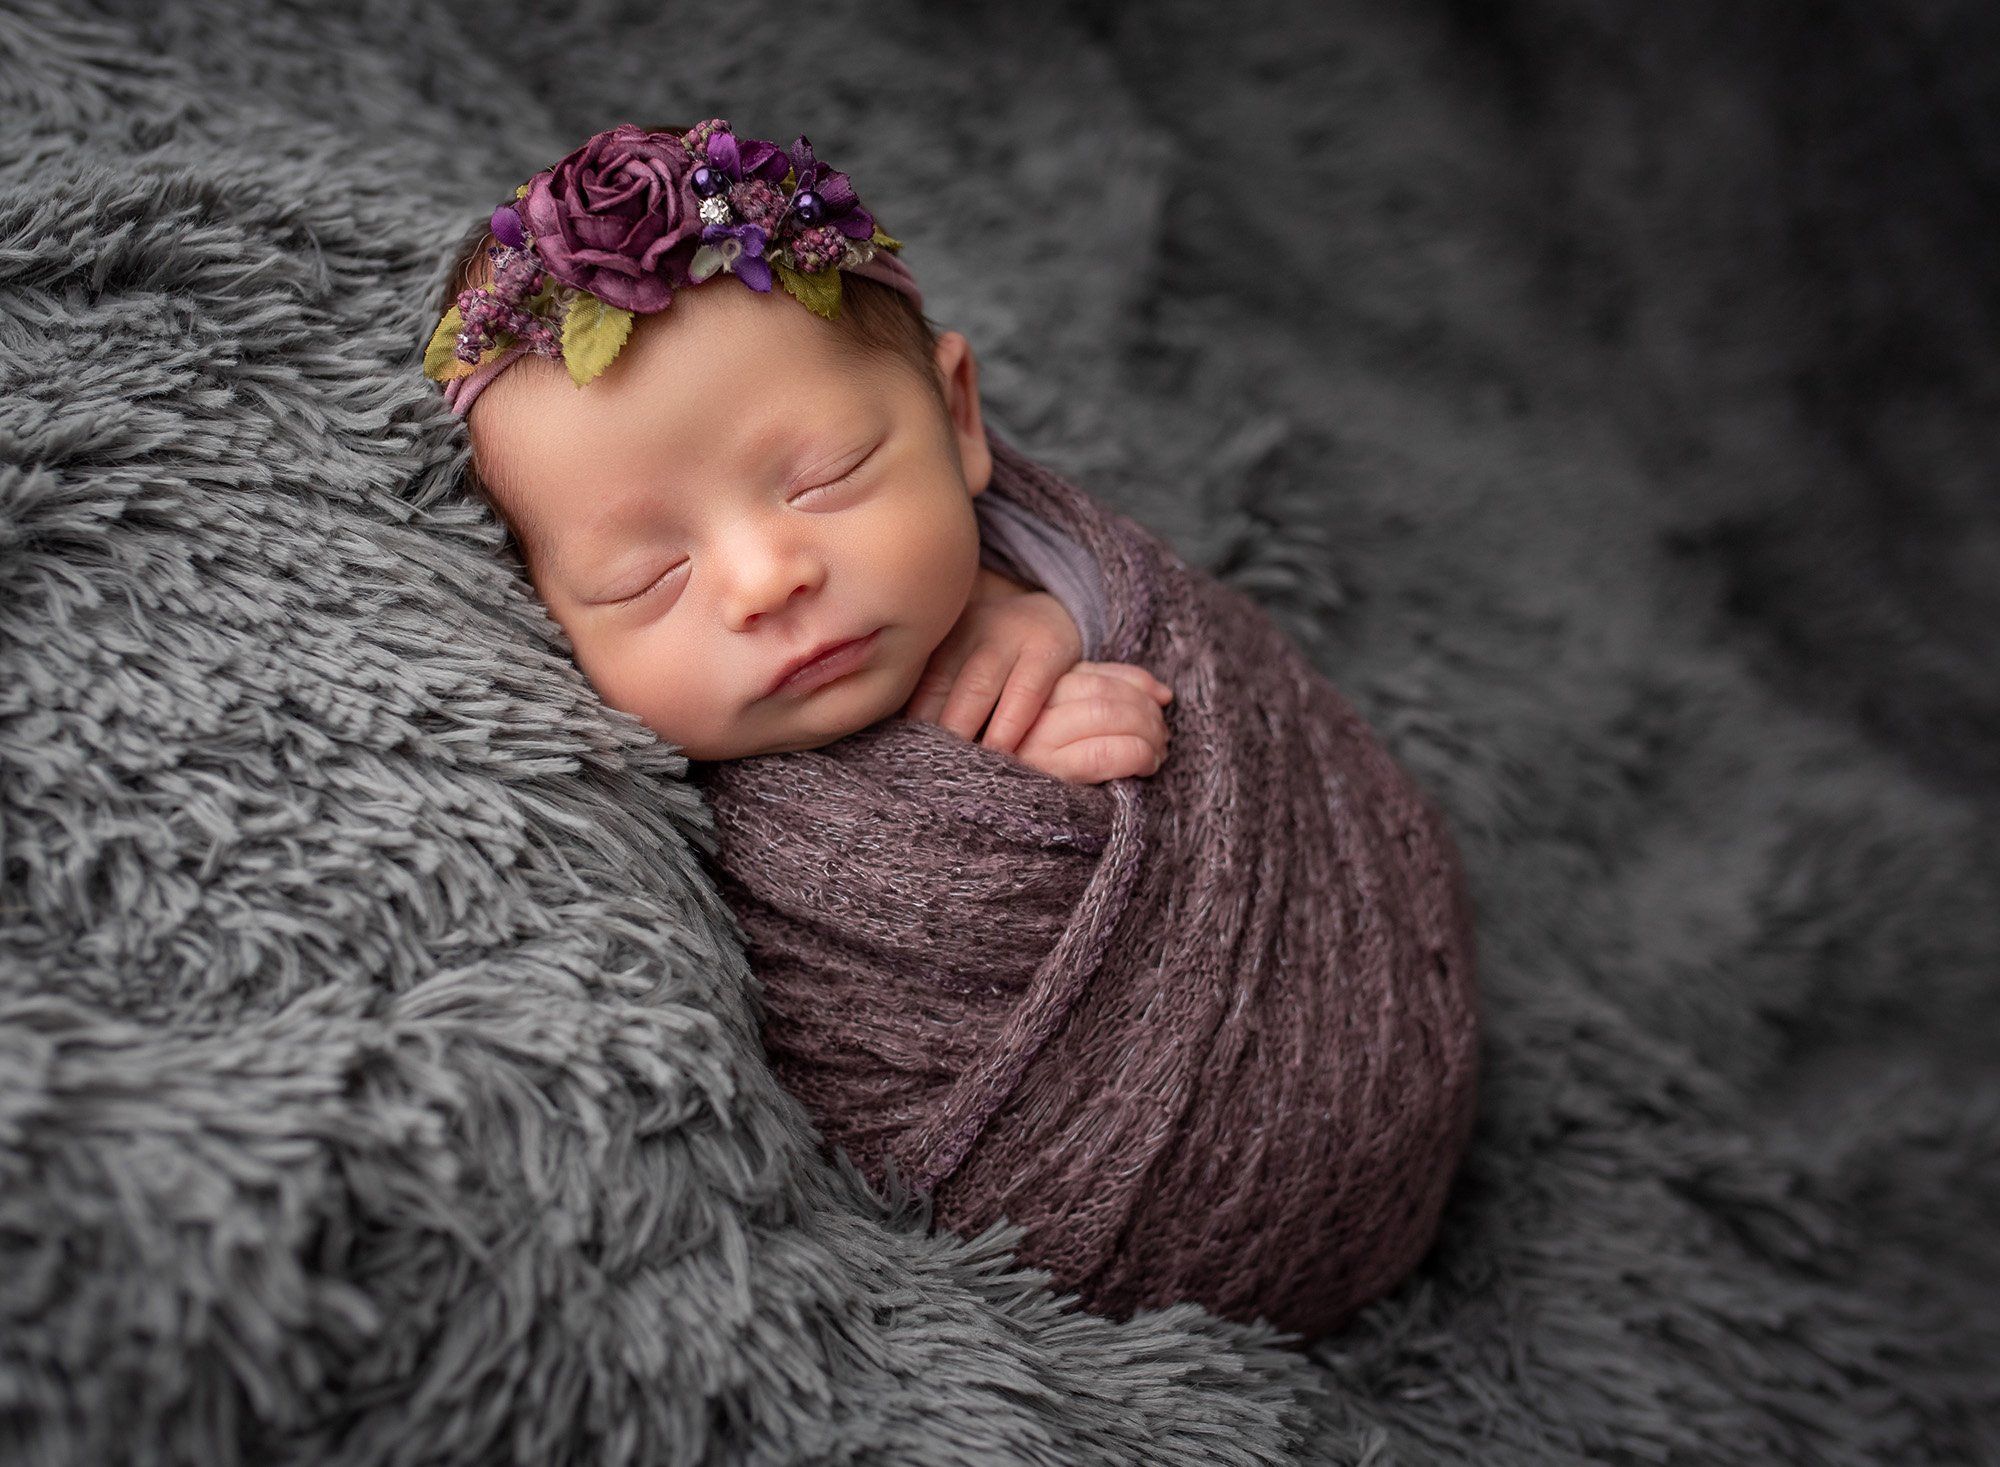 sleeping newborn baby girl on fluffy gray blanket swaddled in purple wearing purple floral headband